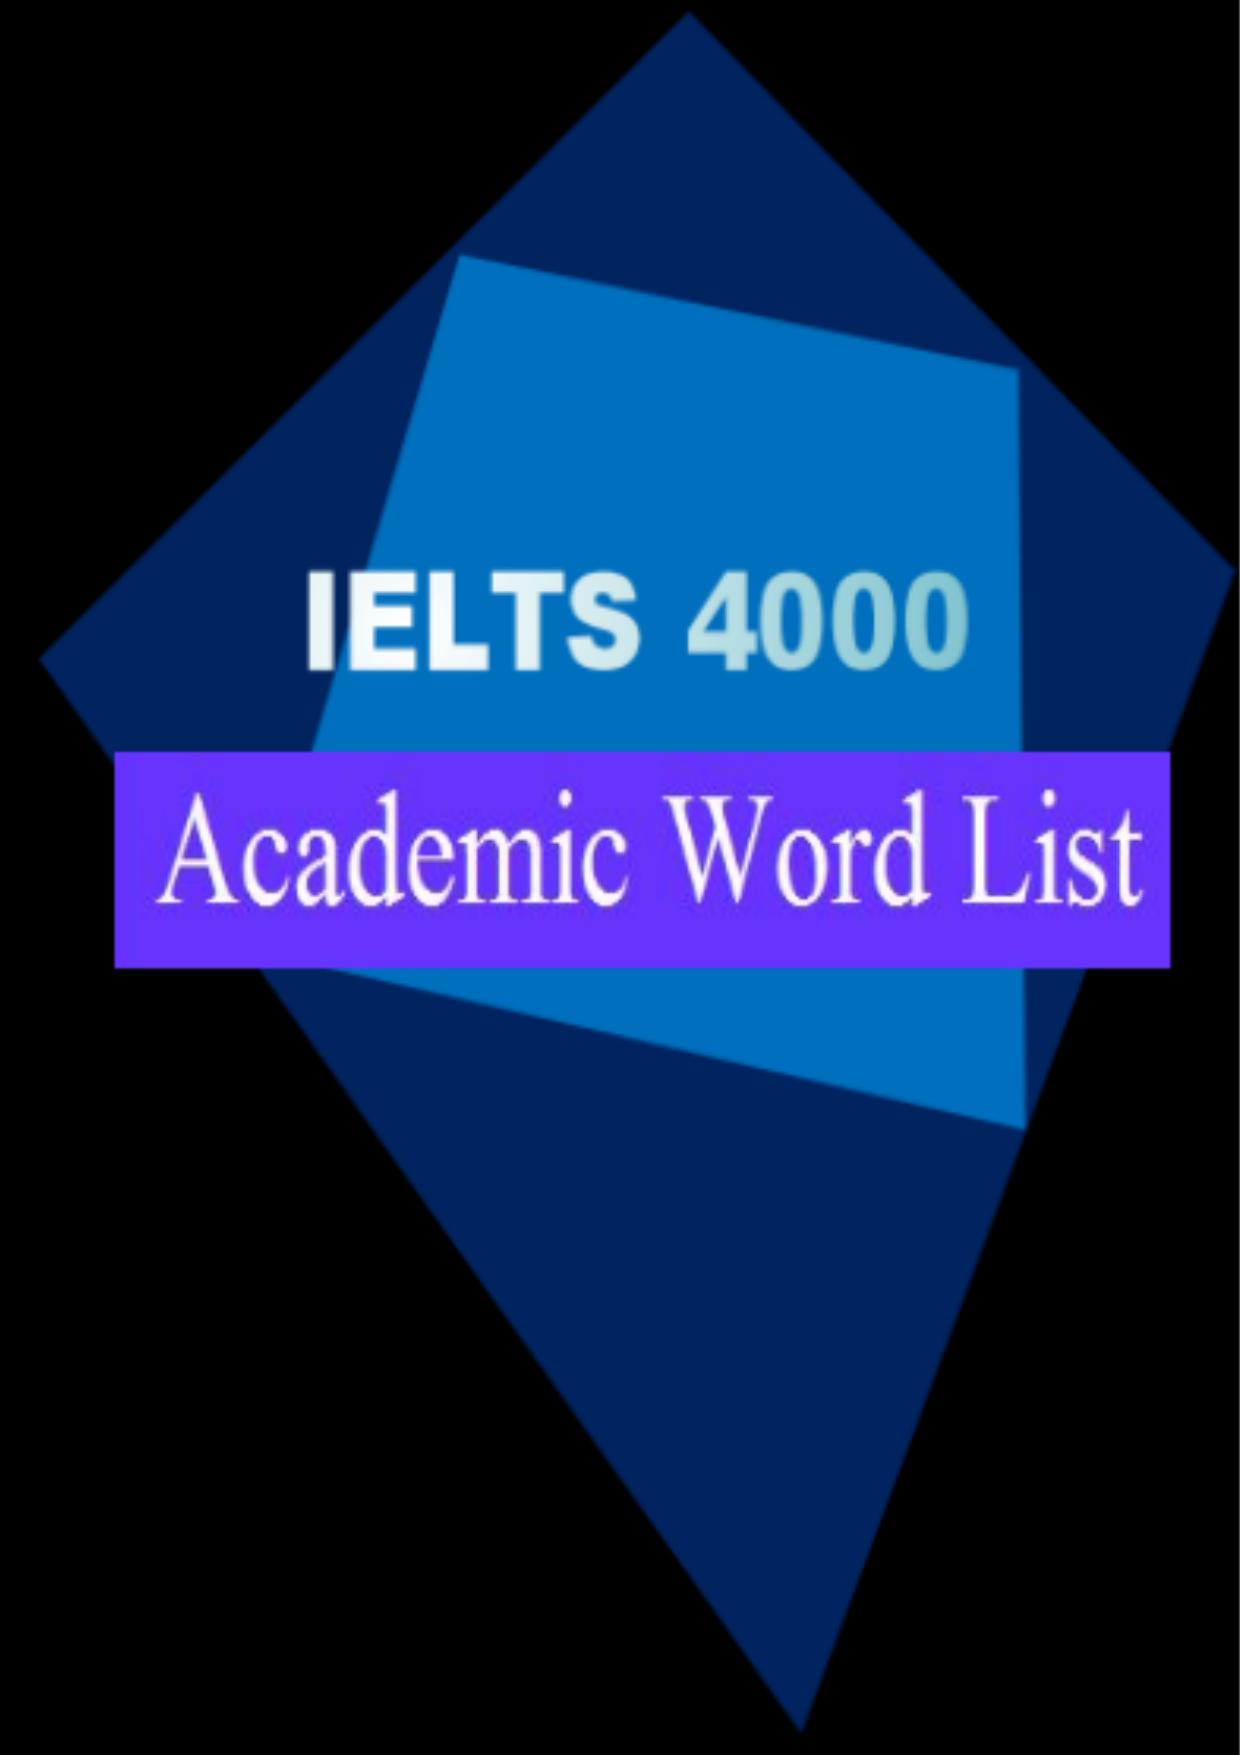 Microsoft Word - IELTS 4000 Academic Word List